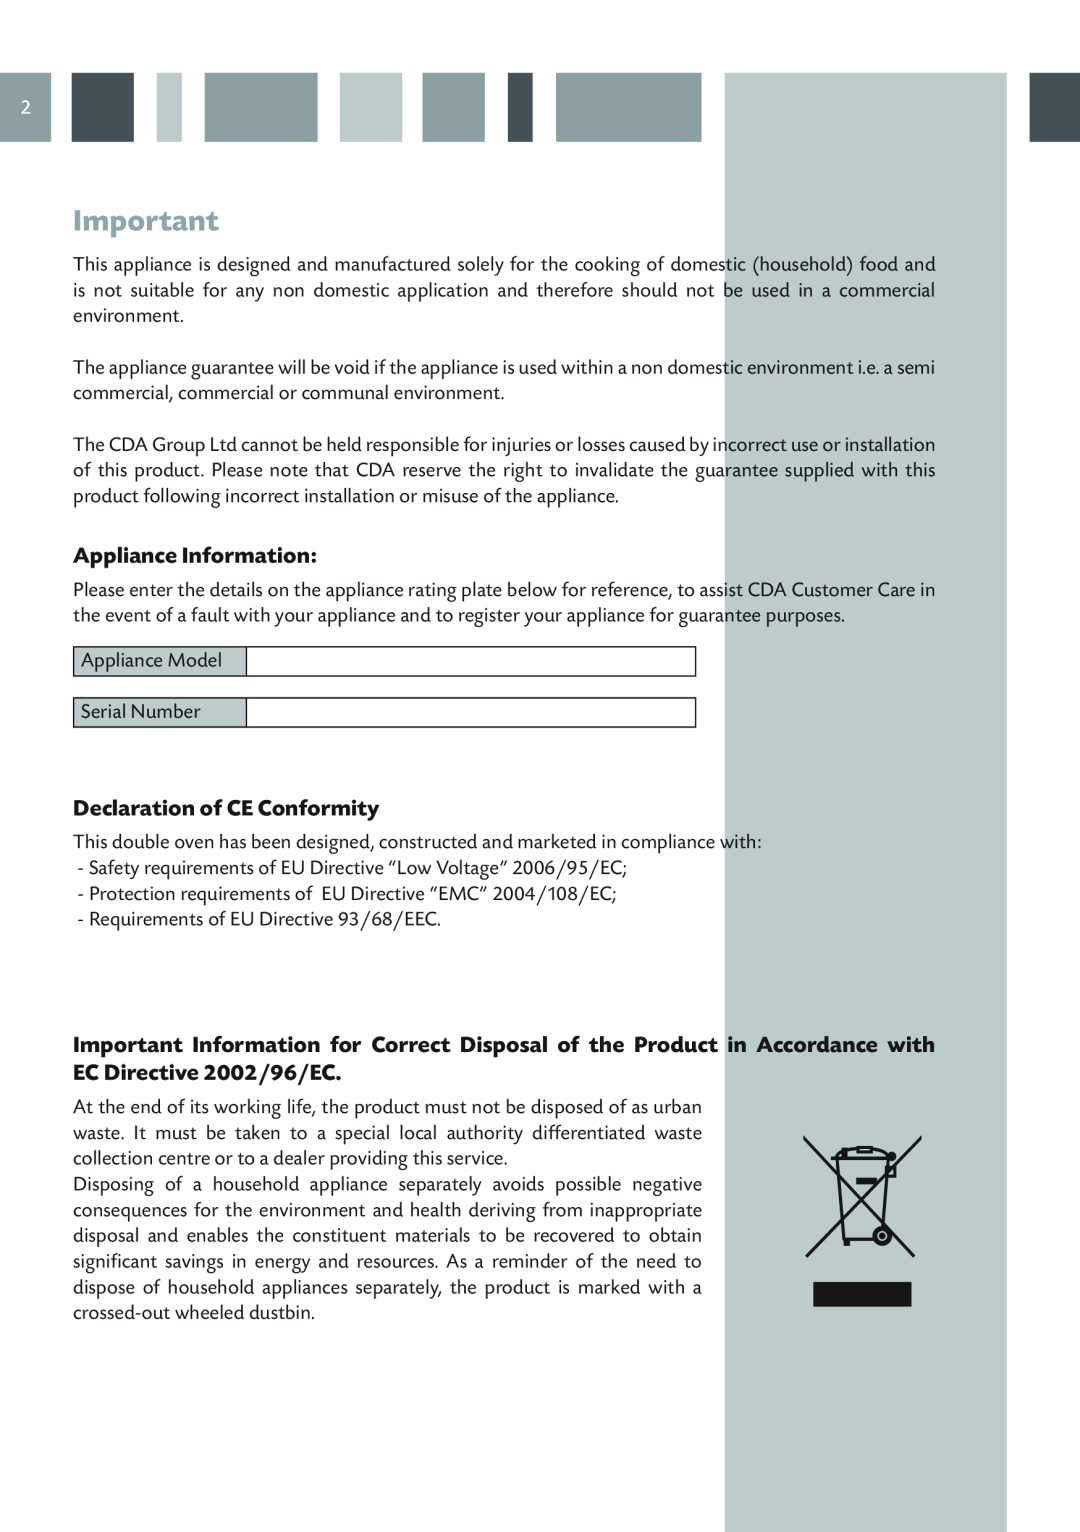 CDA 11Z6 manual Appliance Information, Declaration of CE Conformity 